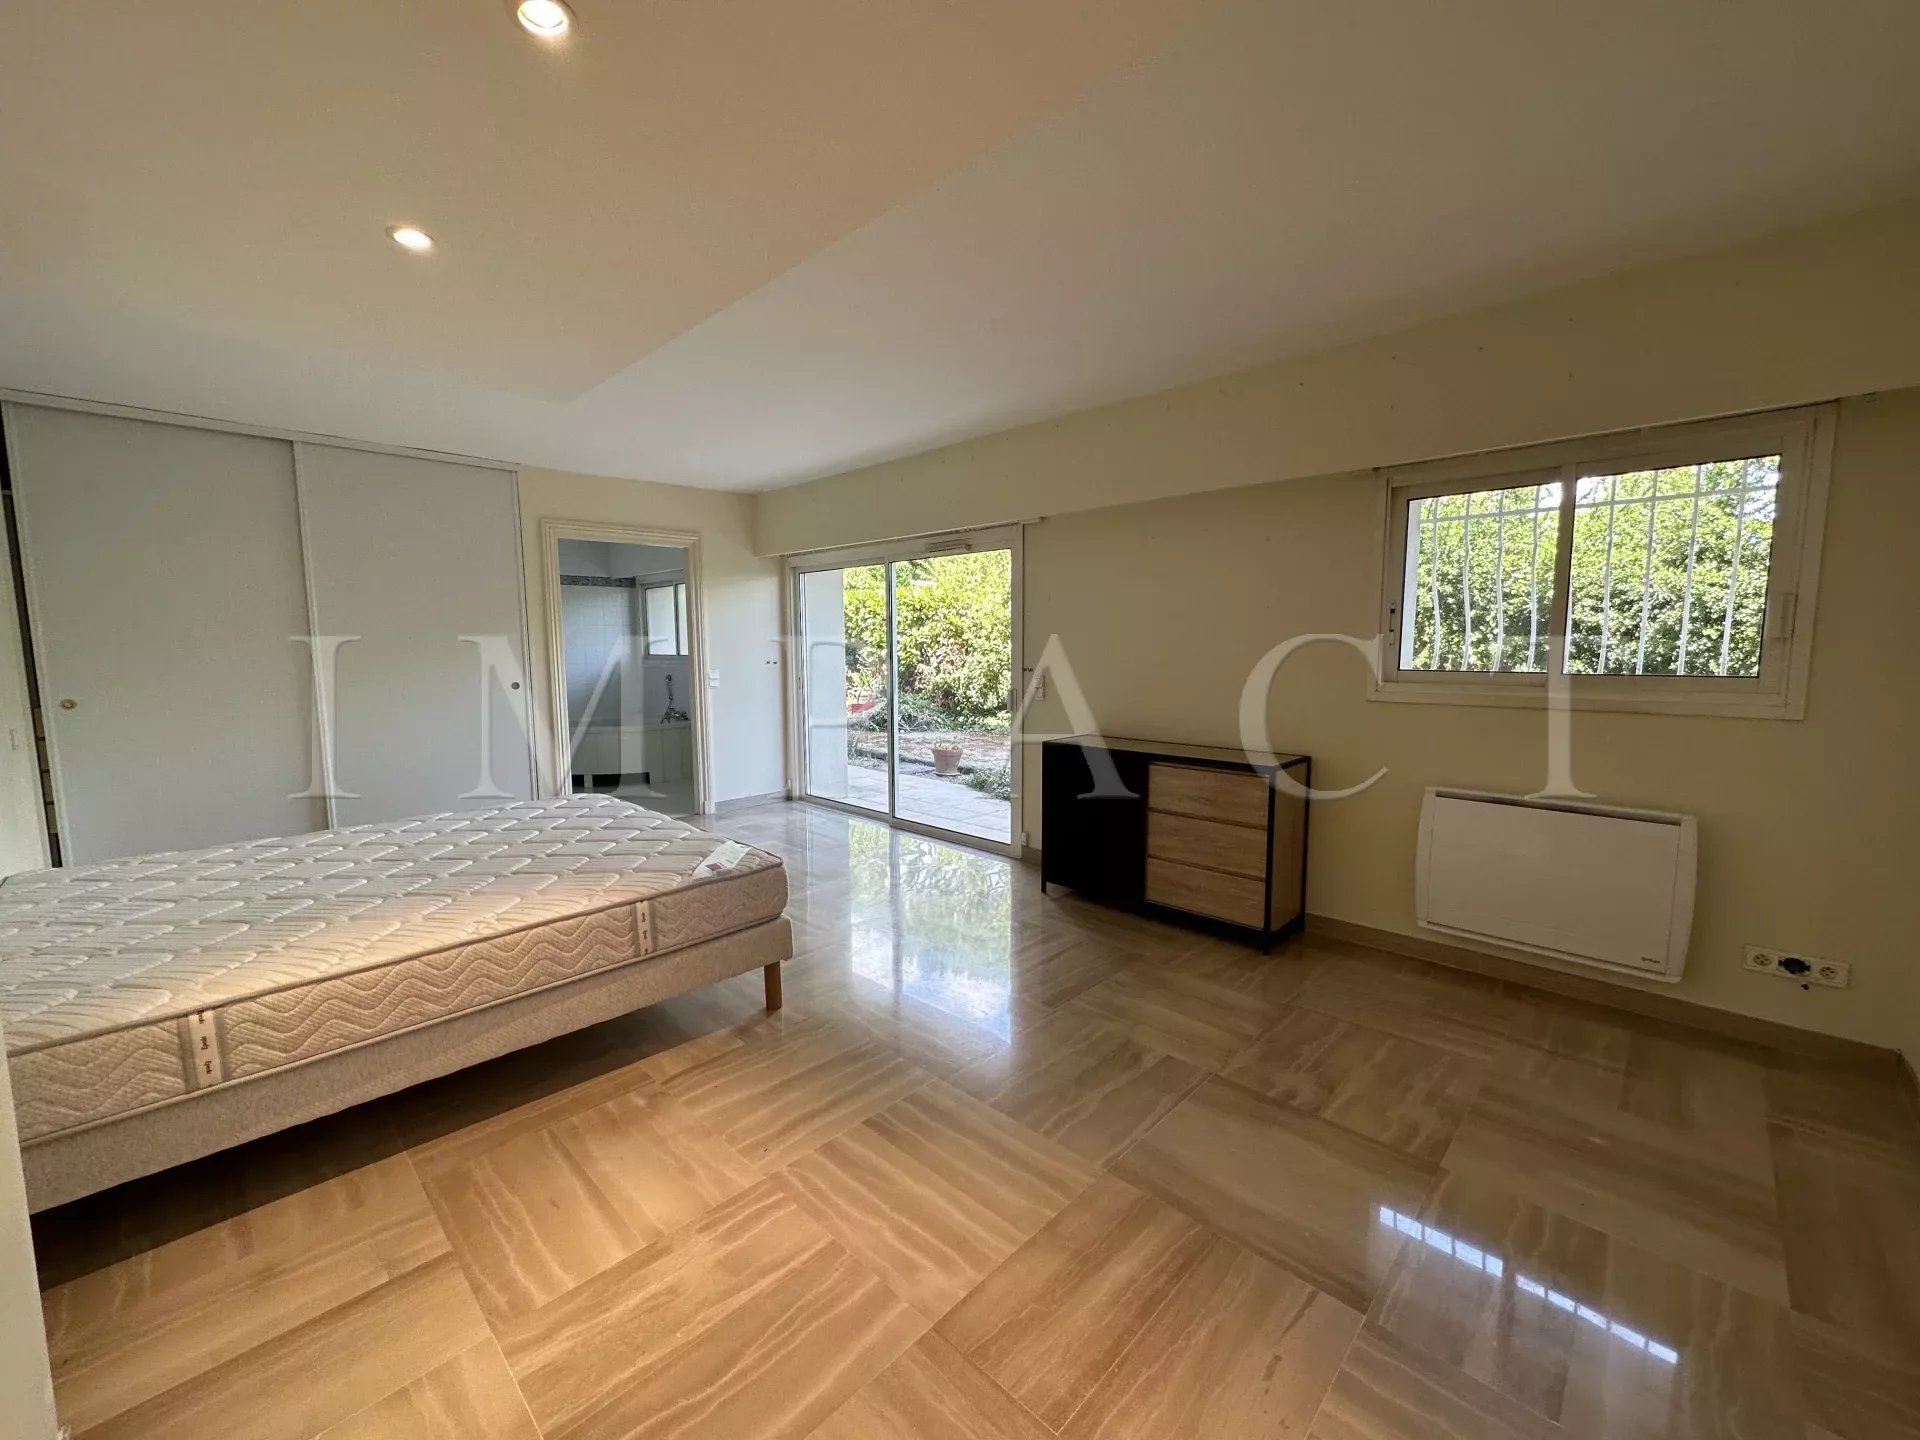 3/4 bedrooms apartment with sea view for sale - Cannes Croix des Gardes